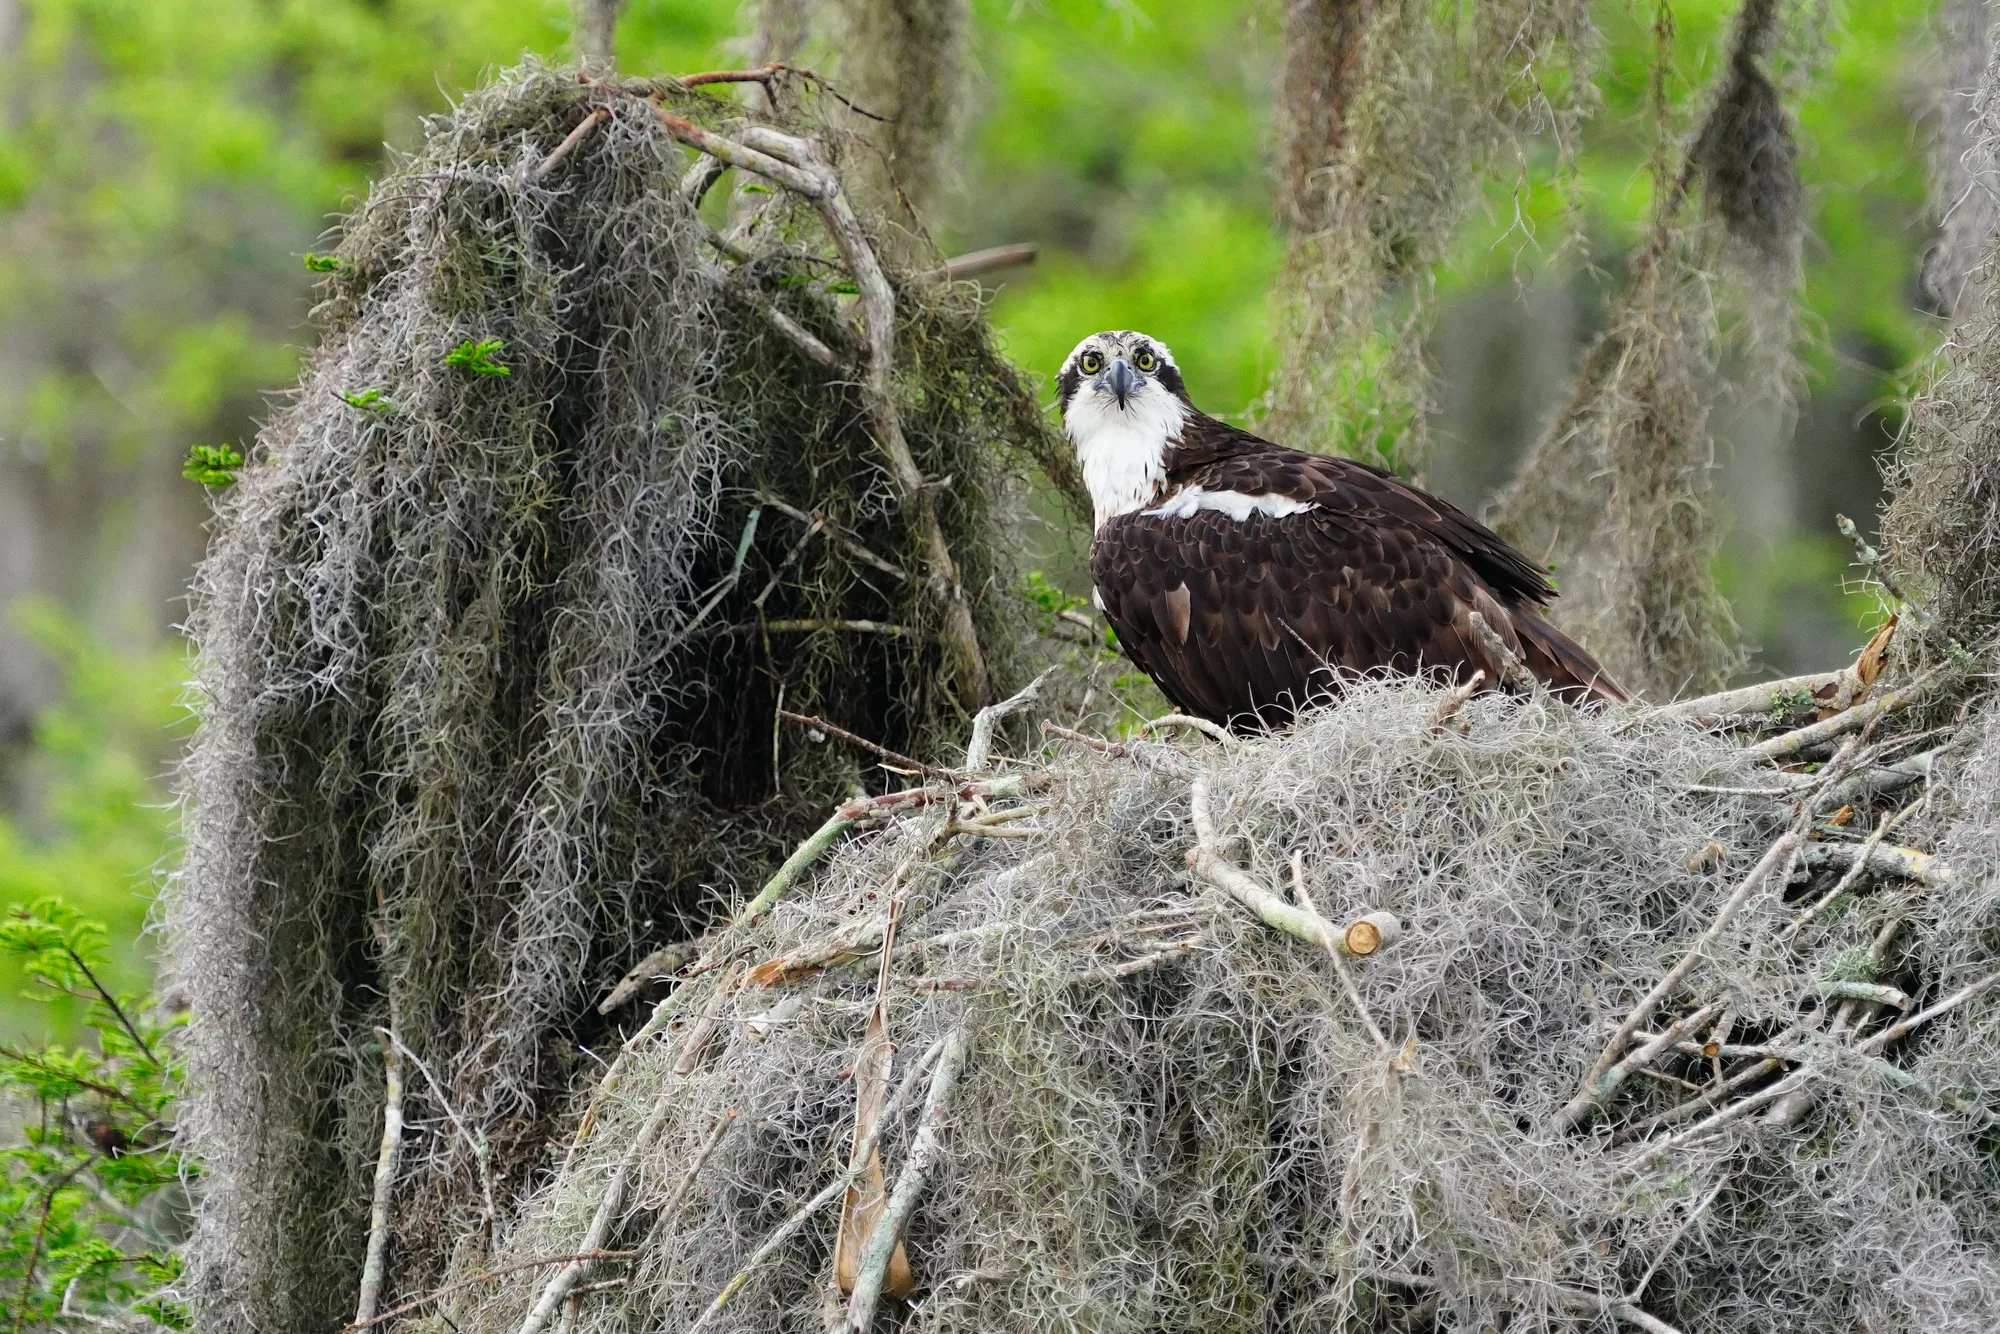 Florida birds photo workshop - ospreys